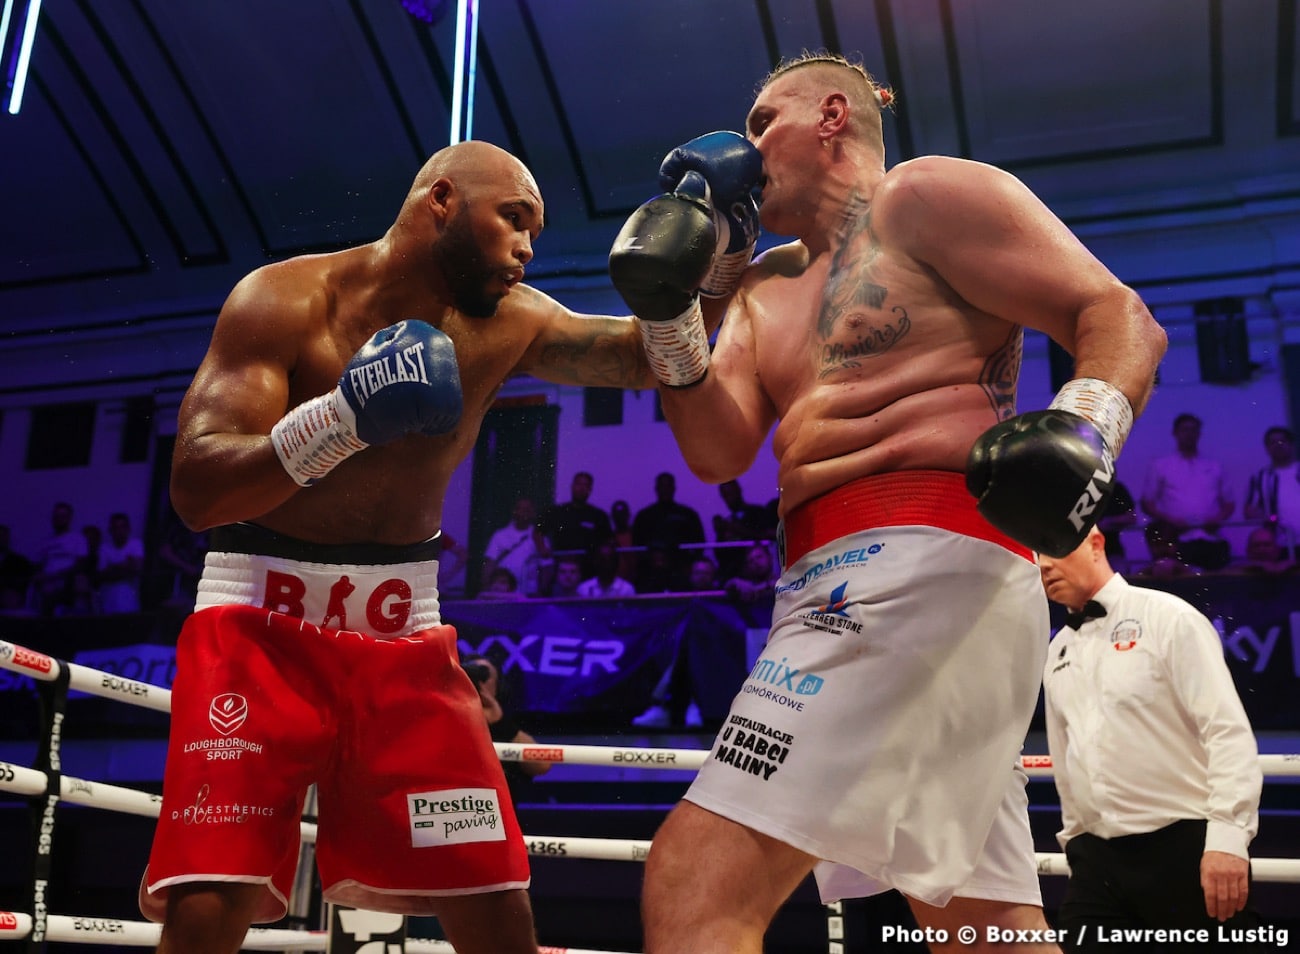 Image: Boxing Tonight: Clarke vs Wach - Fight Results & Scorecards